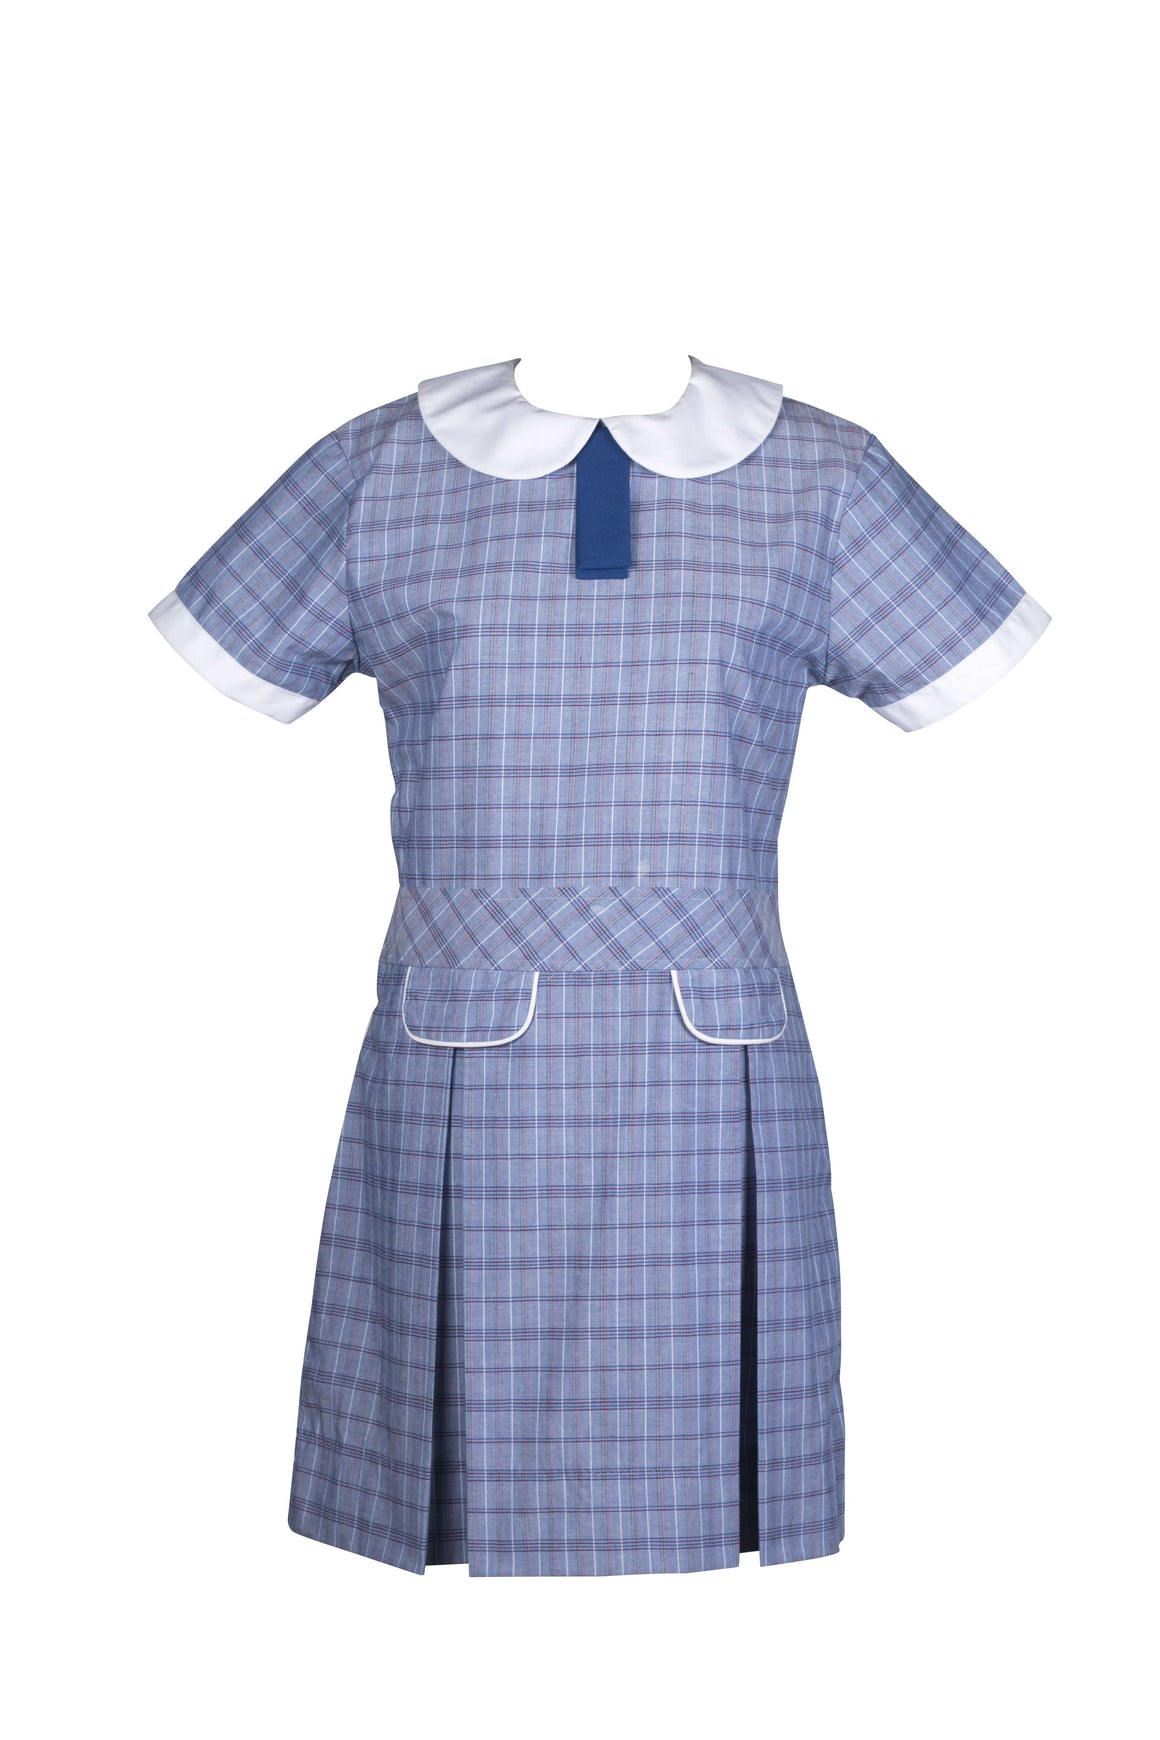 School Uniform Dresses